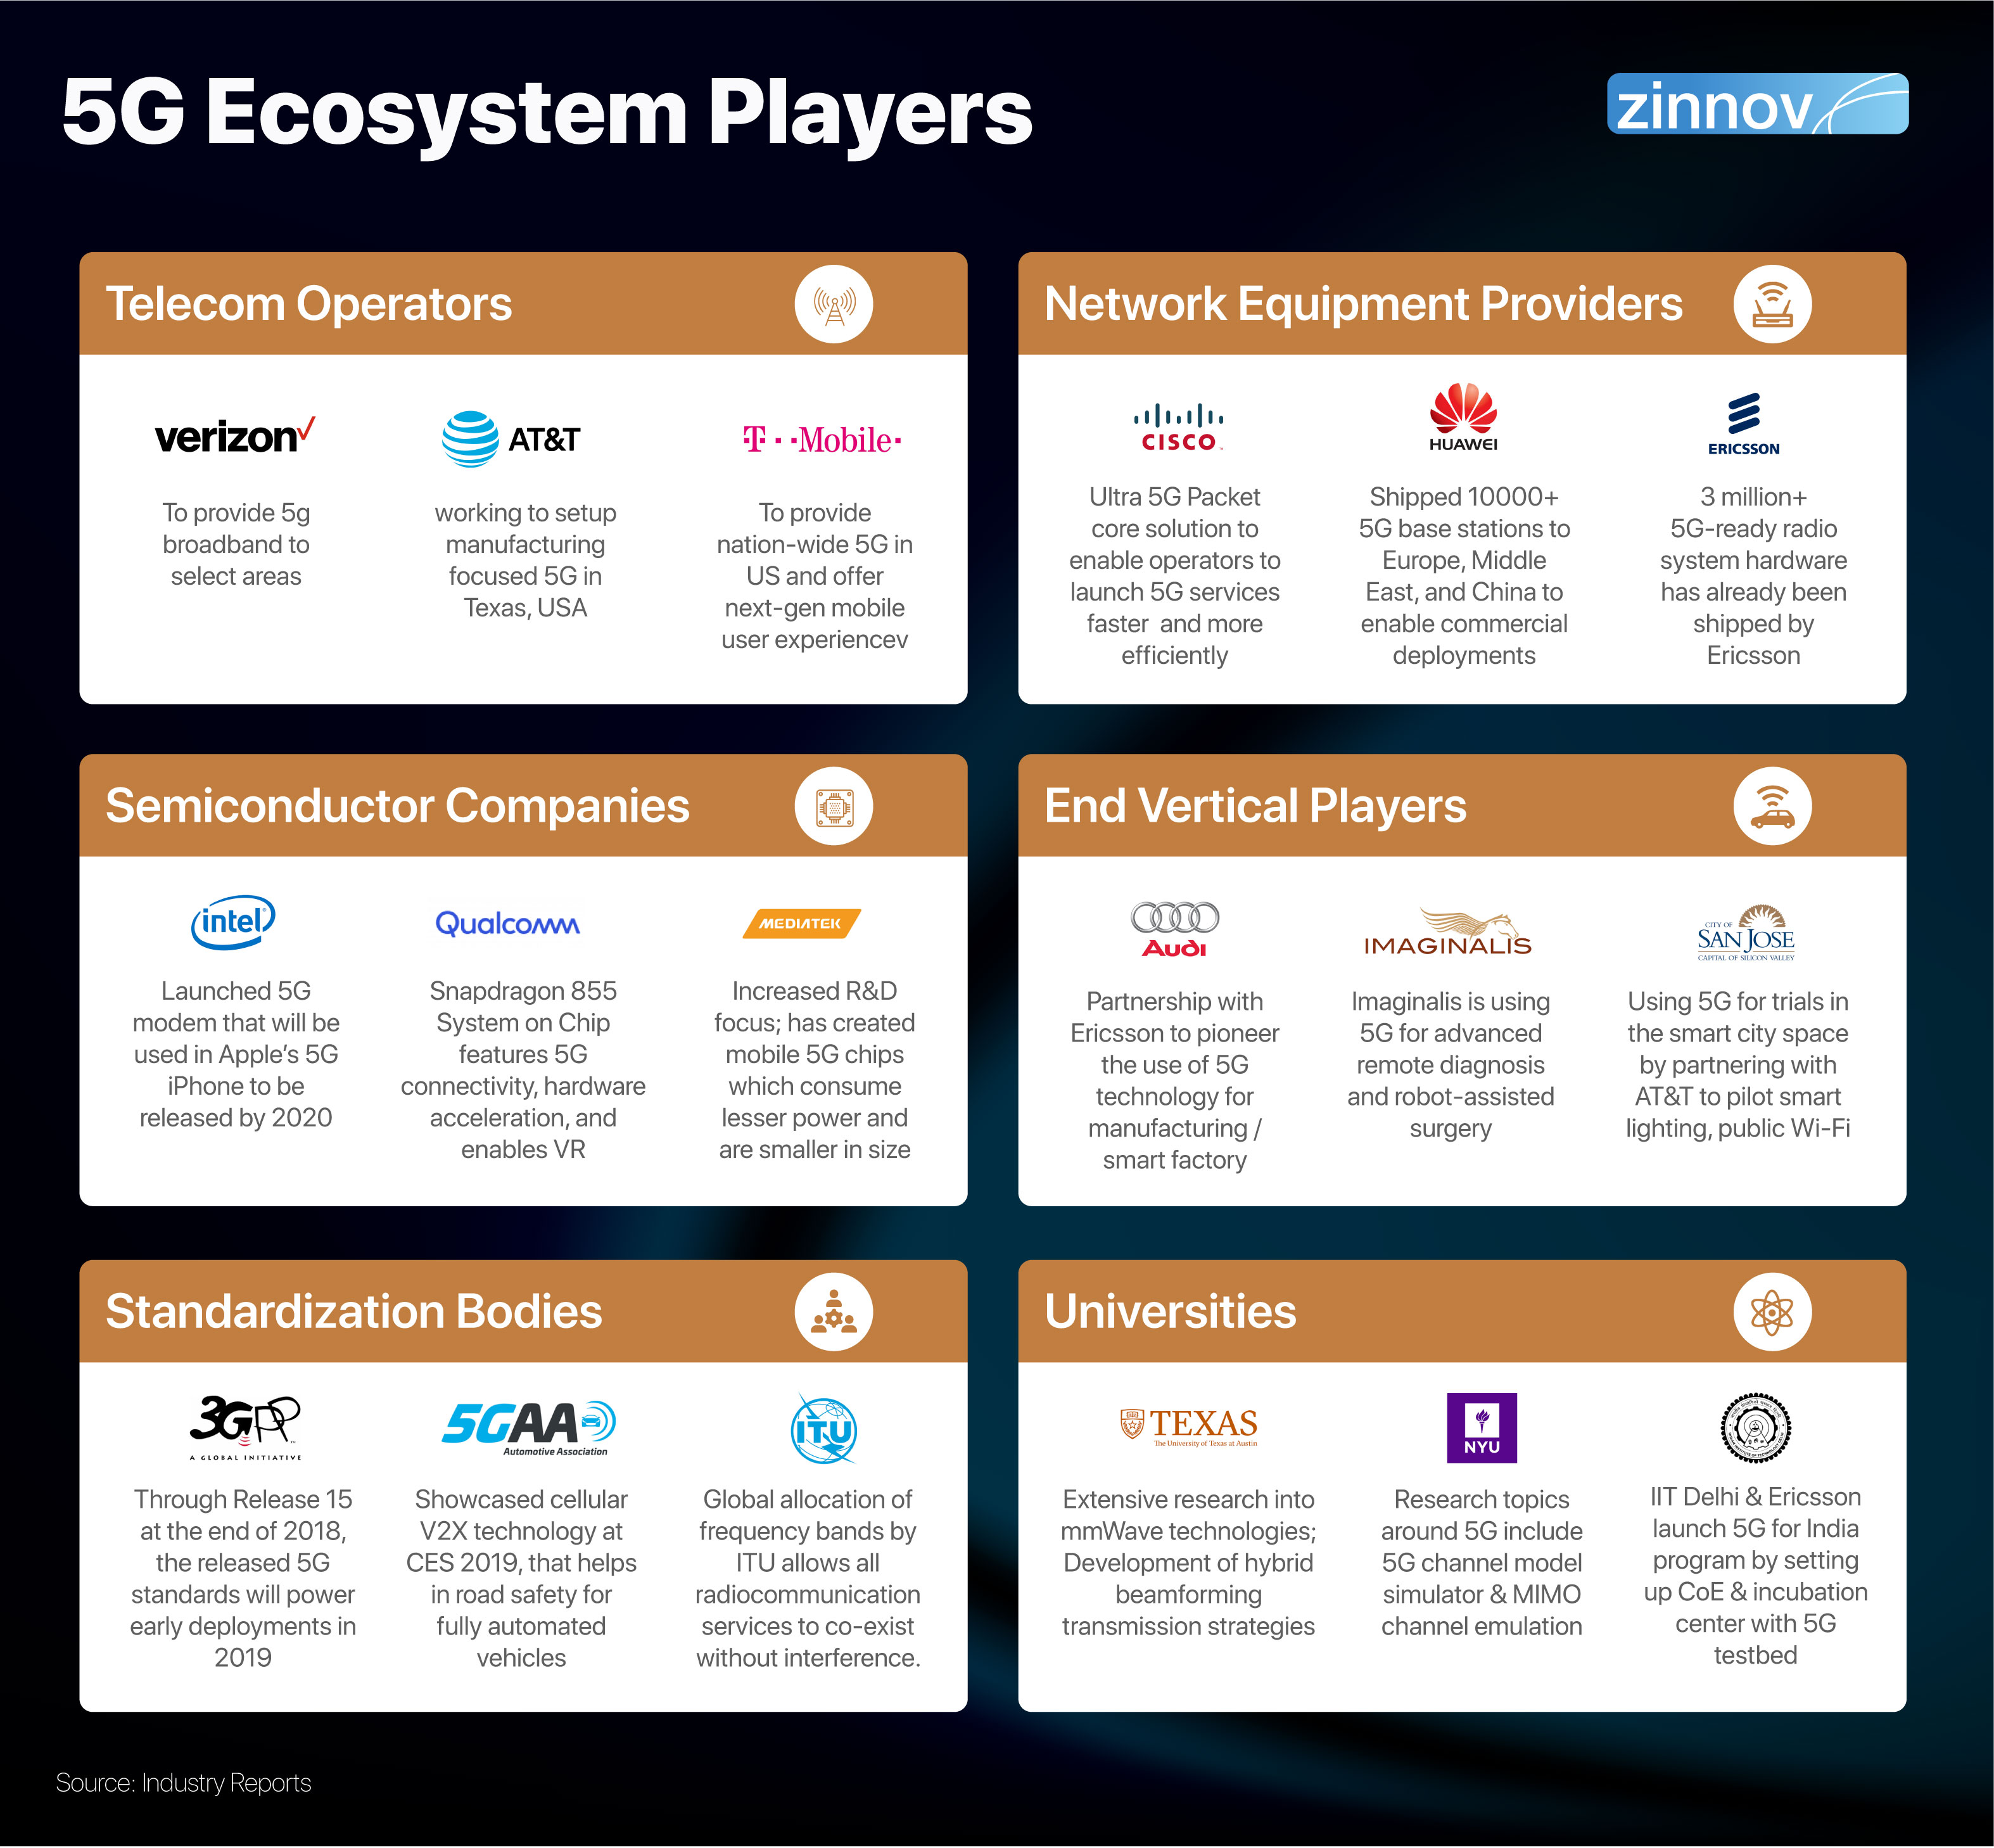 5G ecosystem players